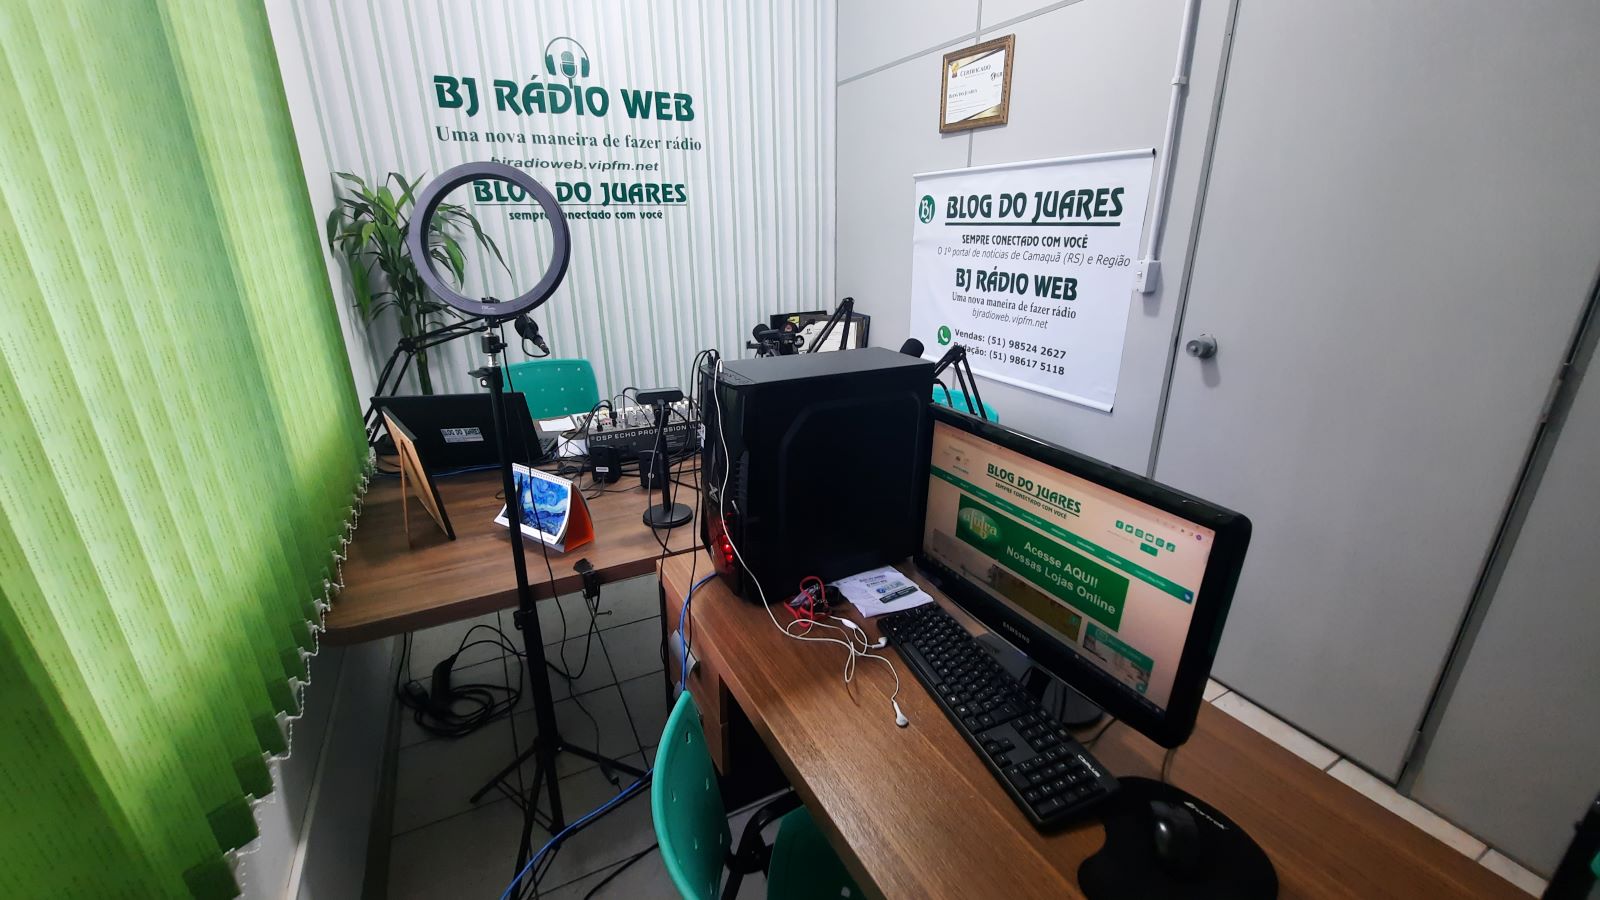 BJ Rádio Web